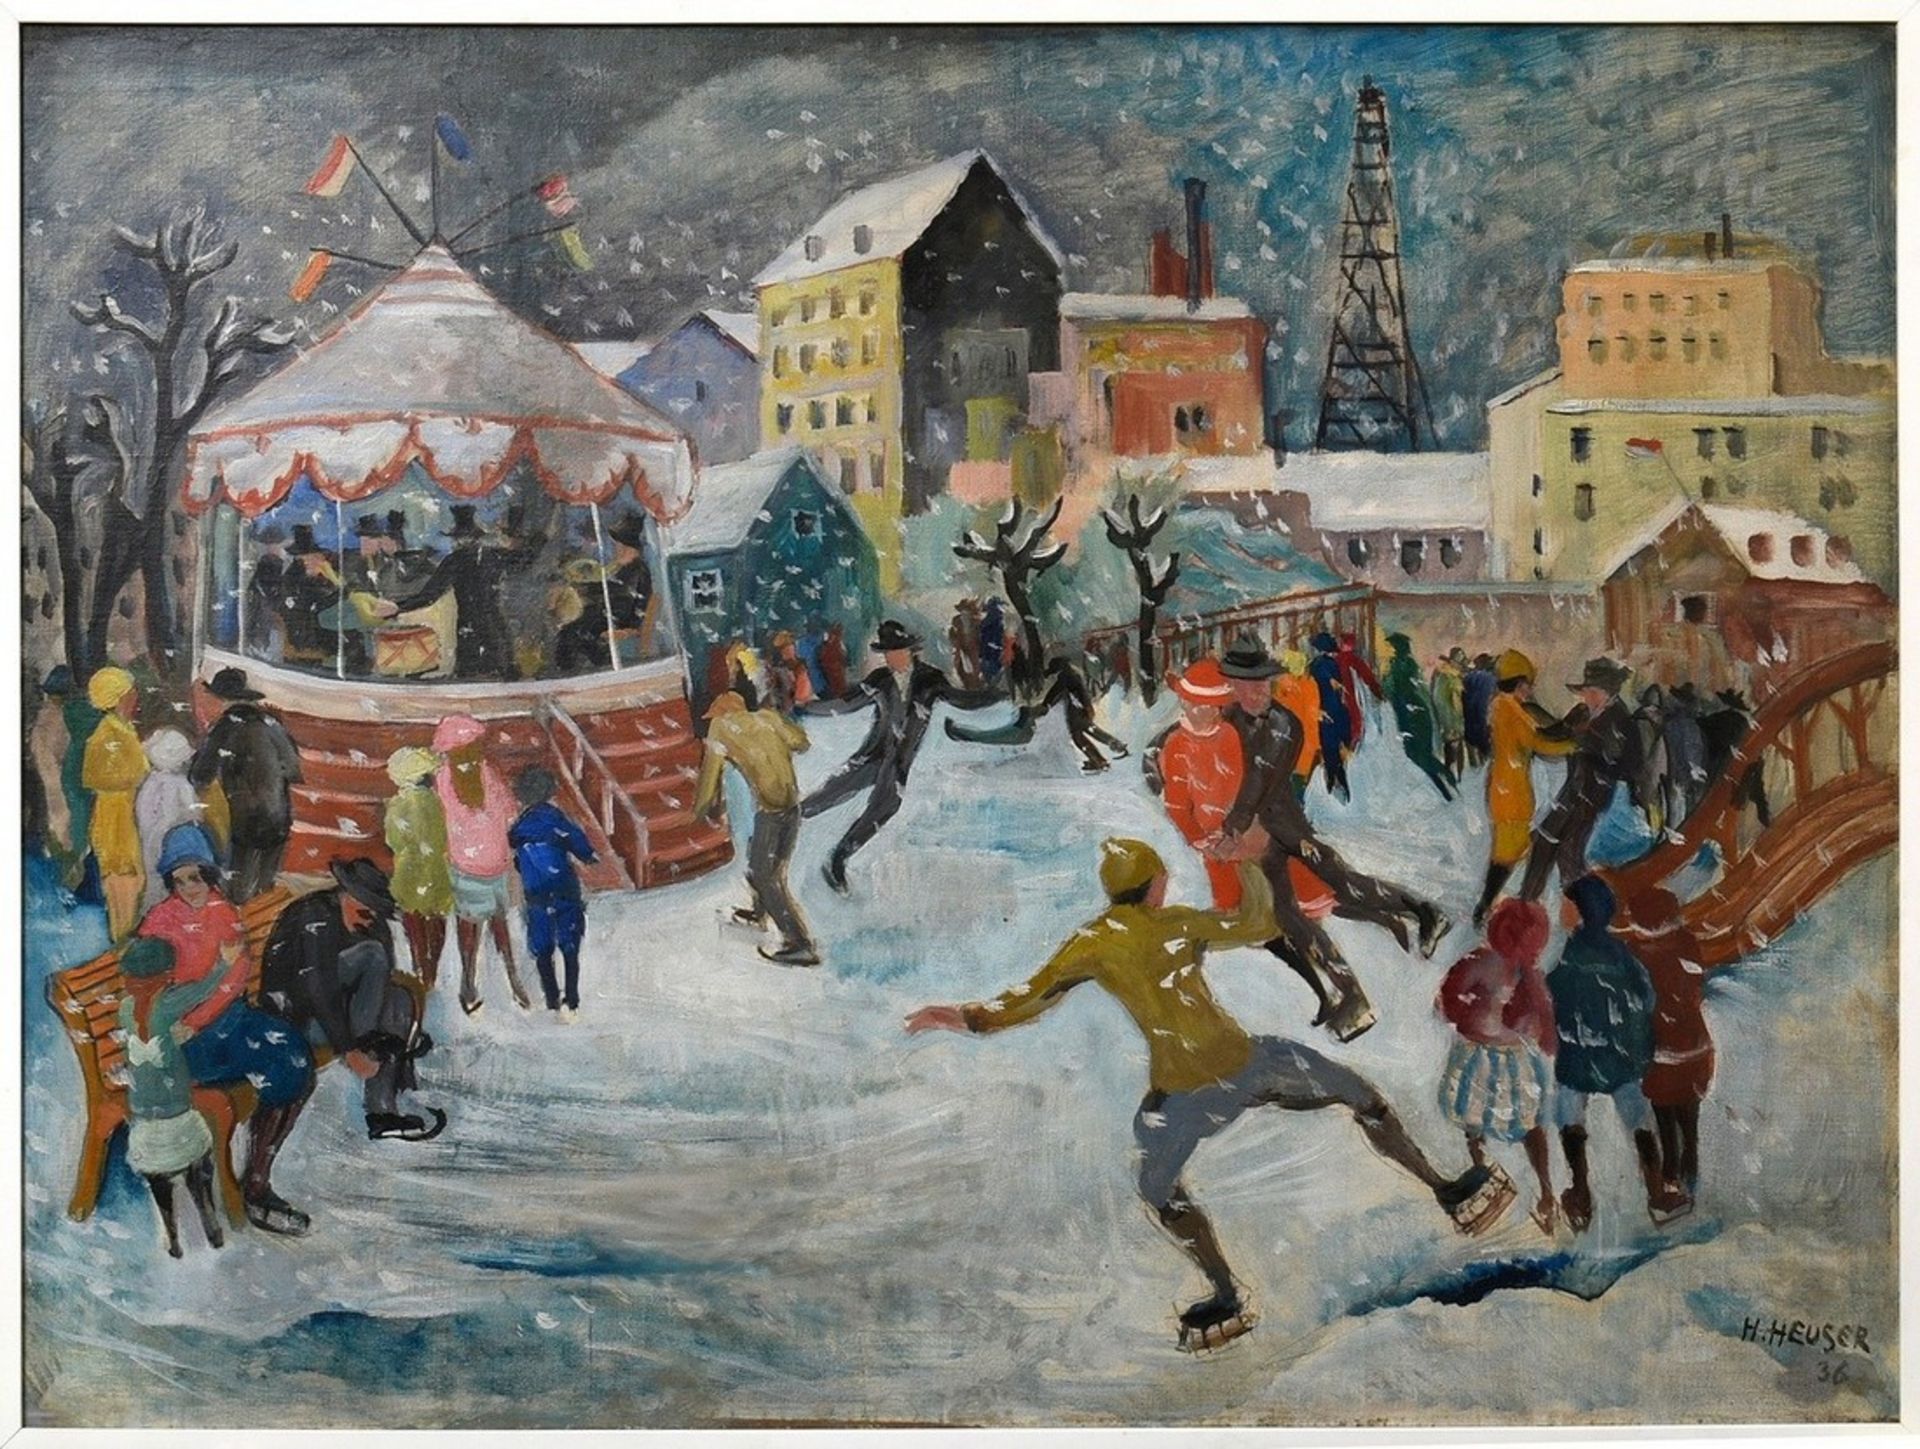 Heuser, Heinrich (1887-1967) "Wintervergnügen" 1936, oil/canvas, b.r. sign./dat., verso adhesive la - Image 2 of 4